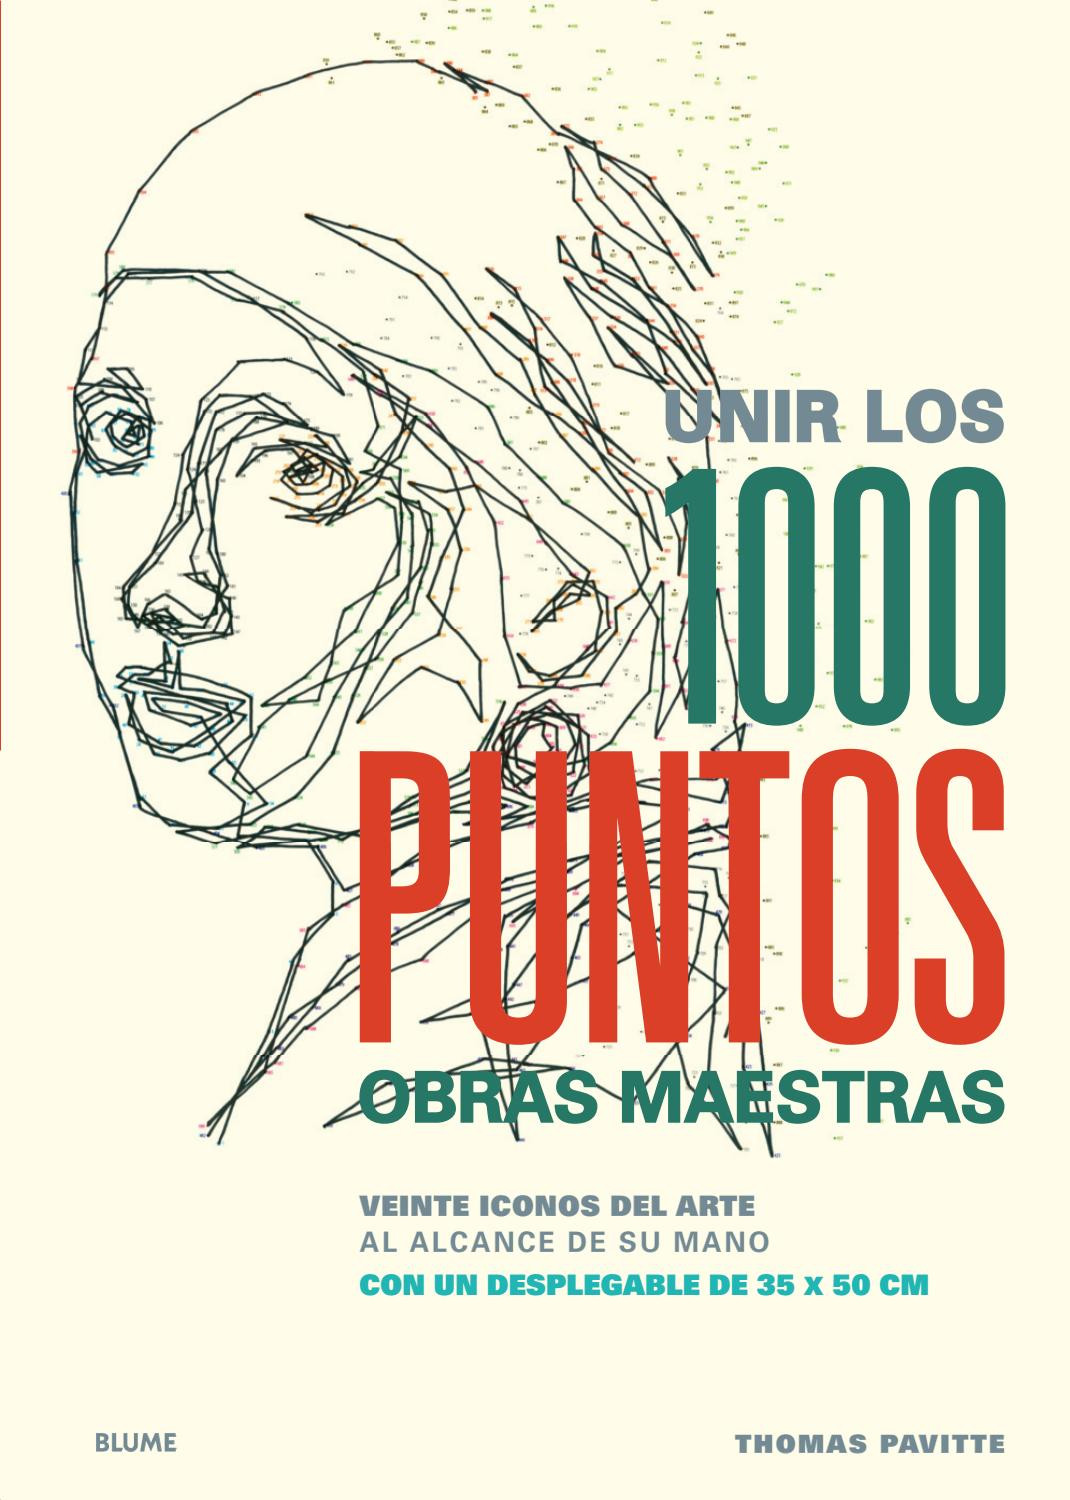 Imagen Unir los 1000 puntos-Obras Maestras/ Thomas Pavitte 2